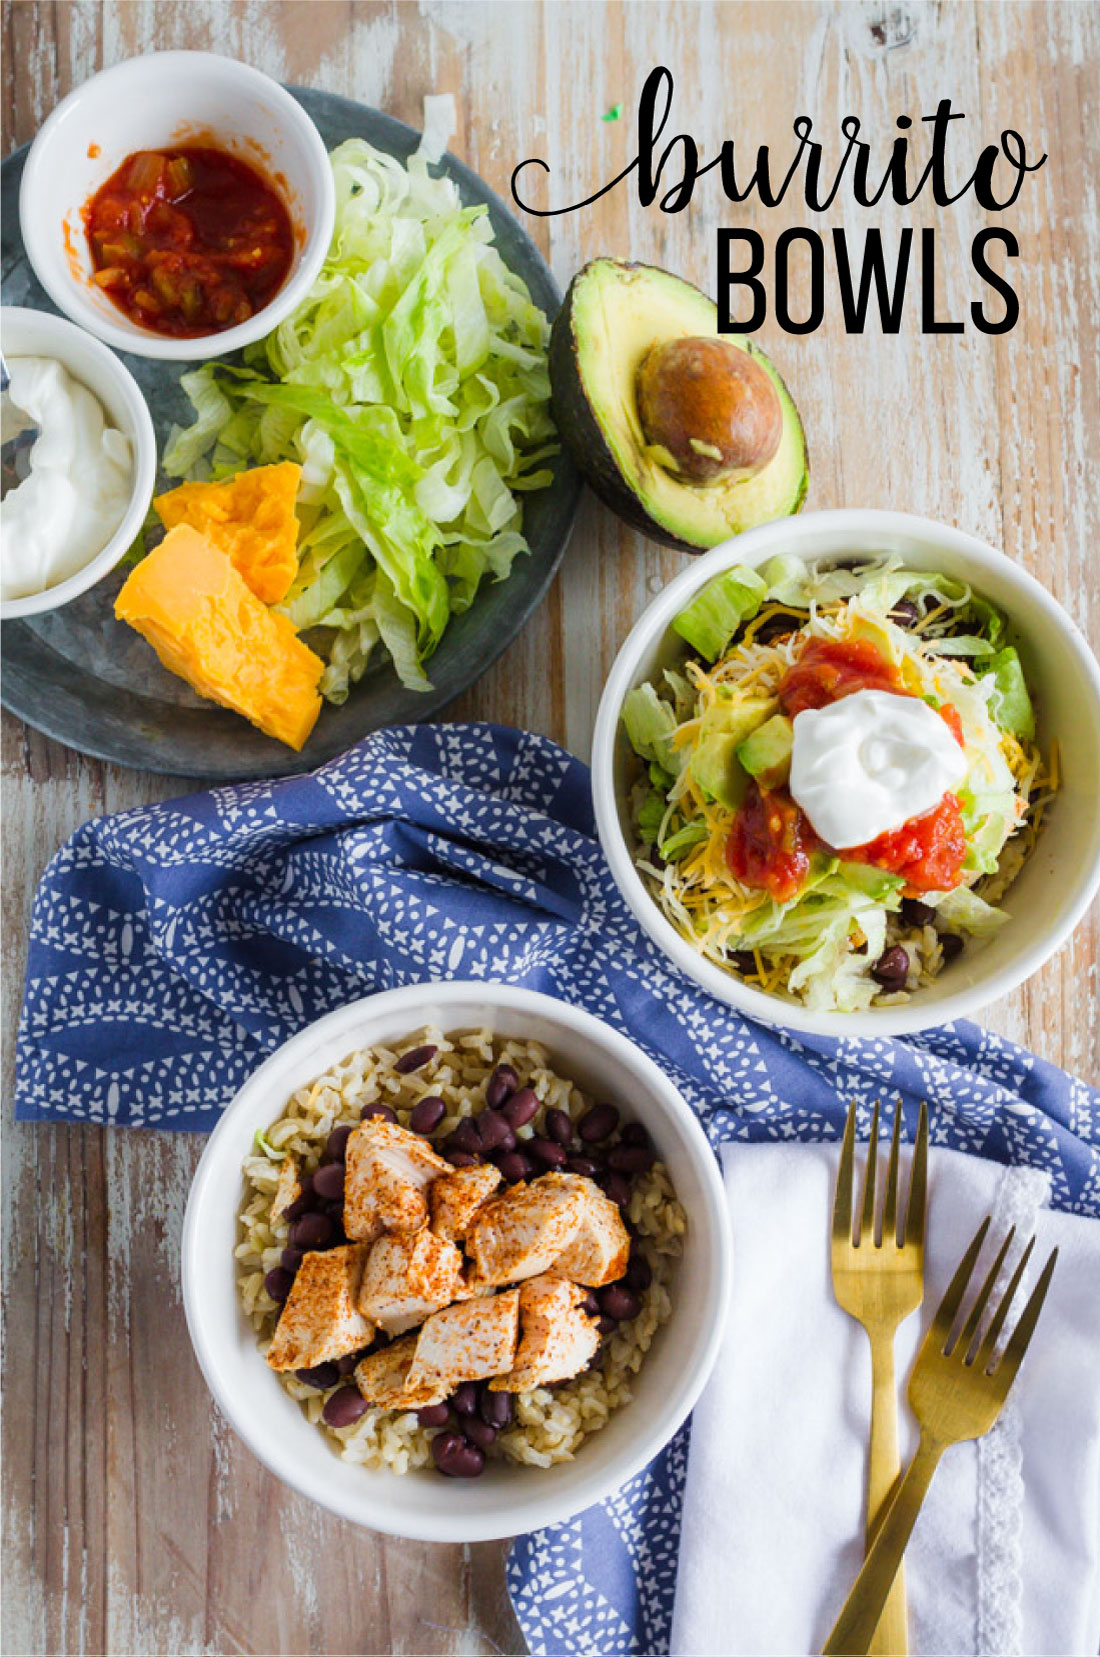 Burrito Bowl Recipe - an easy, healthy, family friendly dinner idea. www.thirtyhandmadedays.com